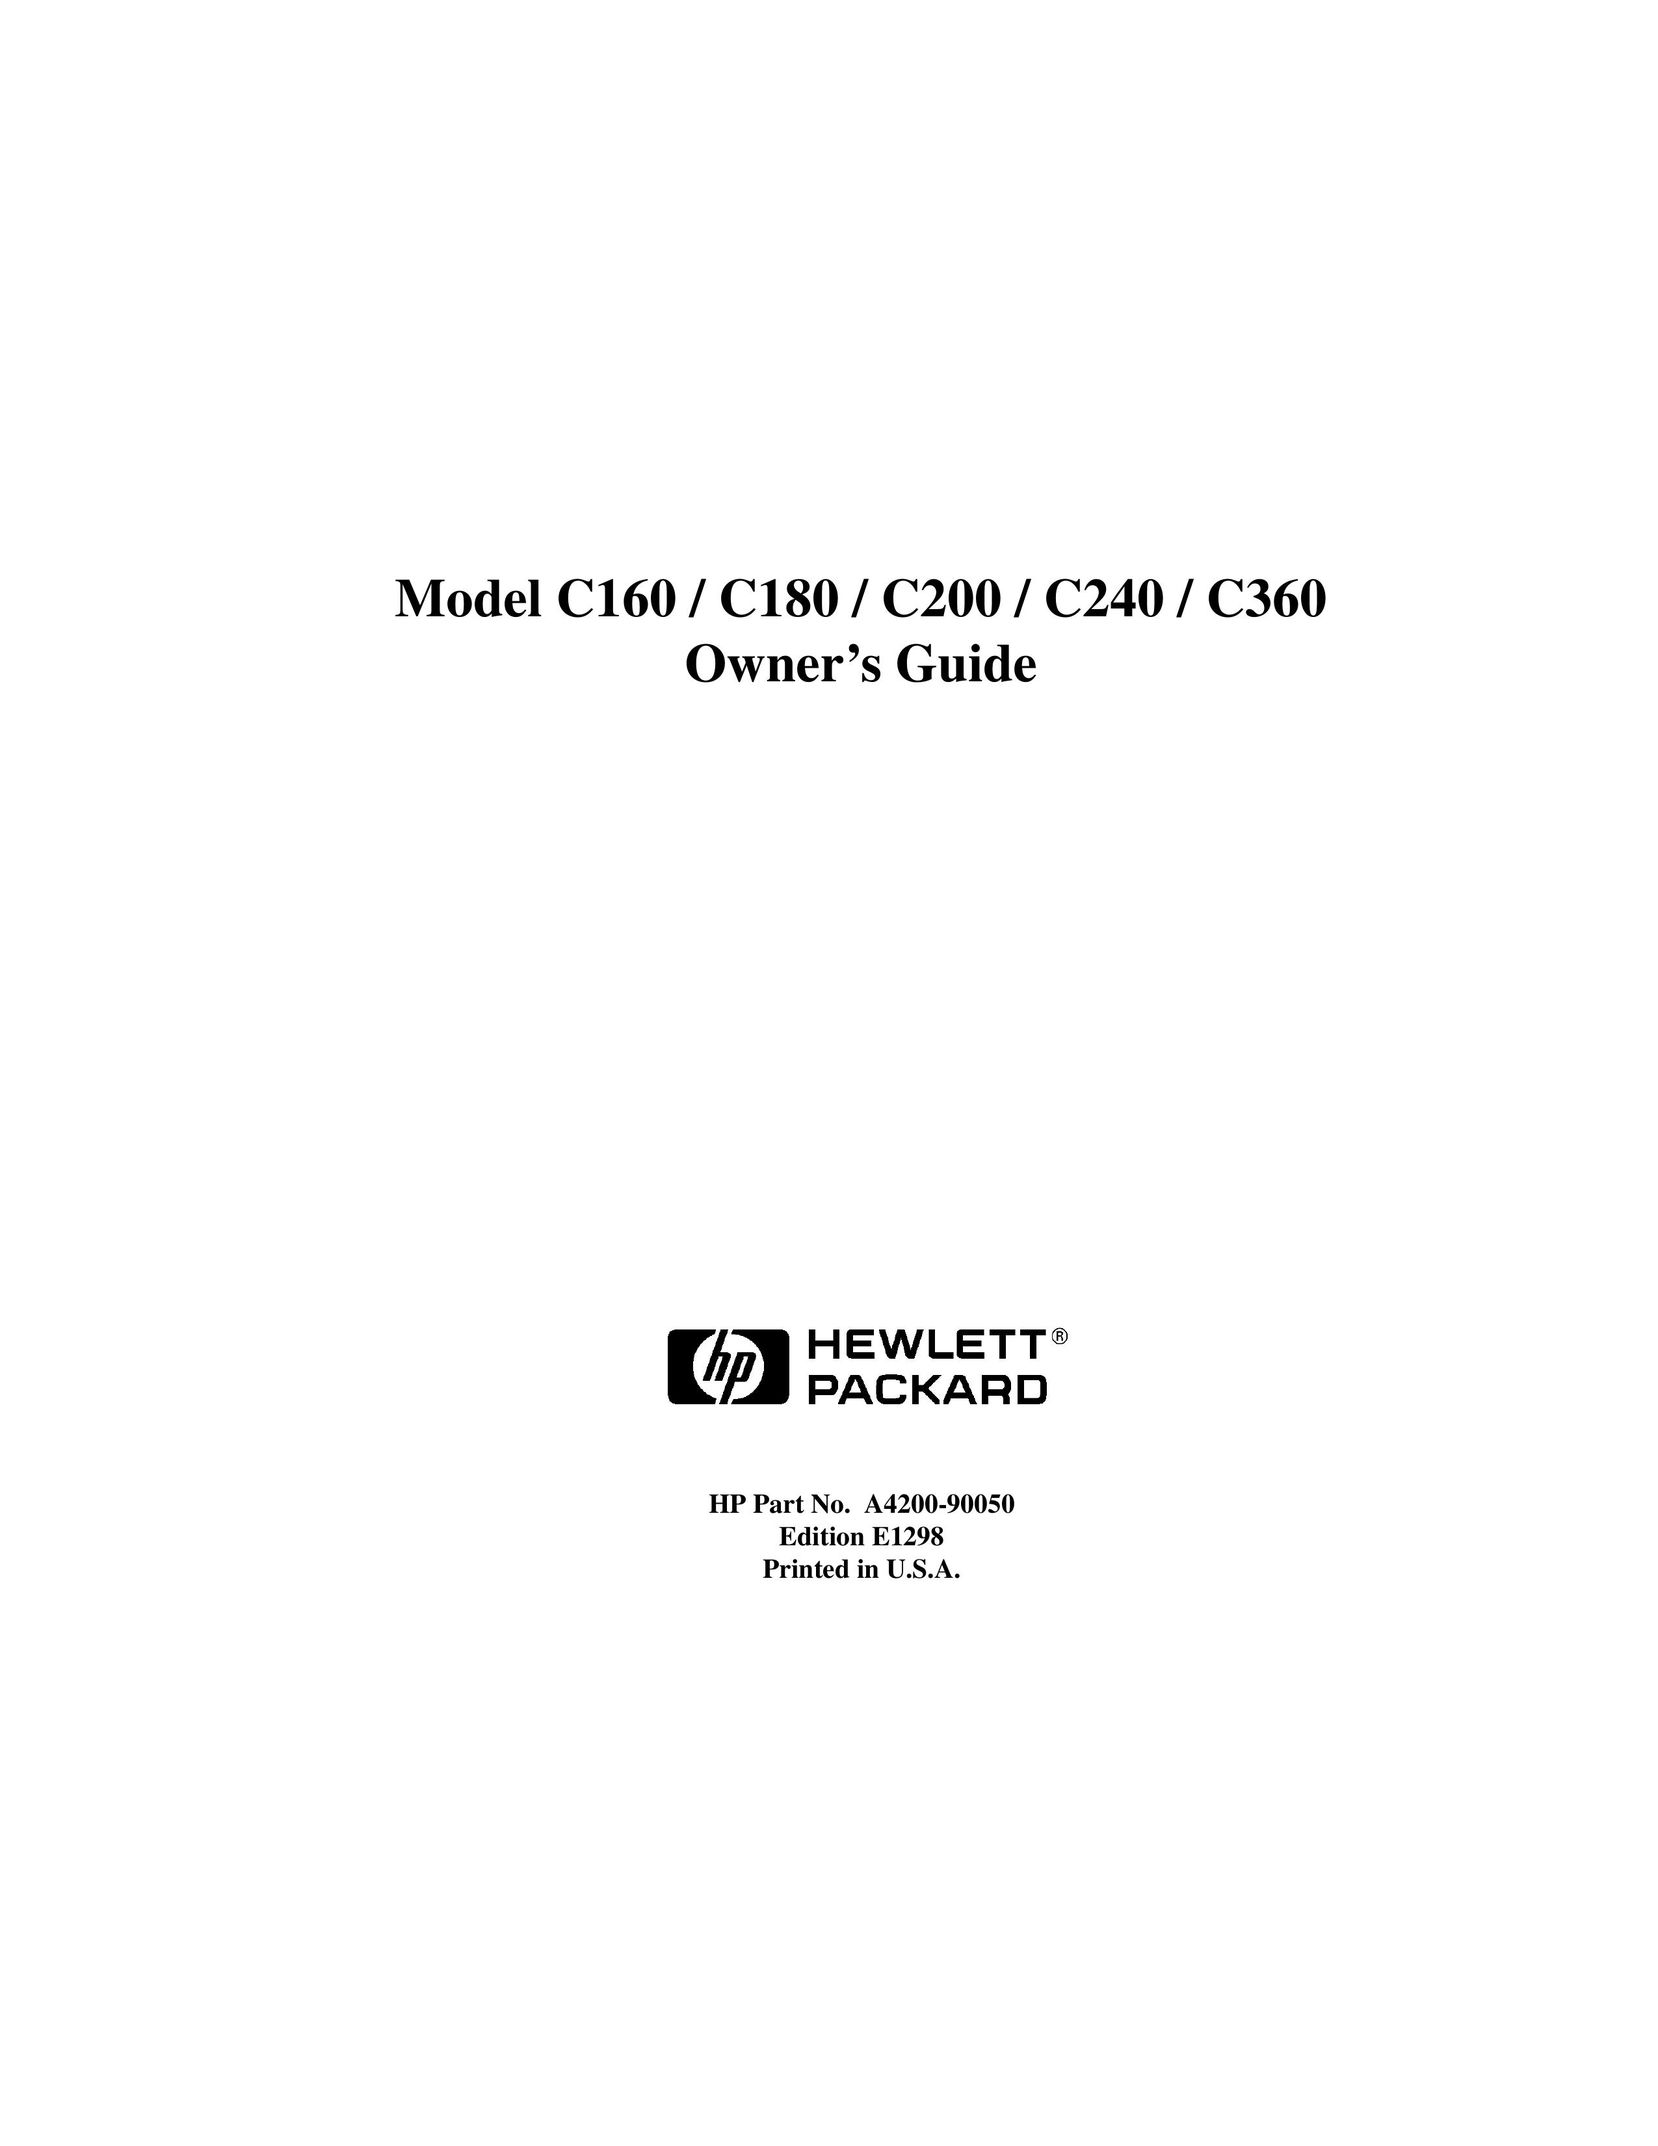 Compaq C240 Computer Monitor User Manual